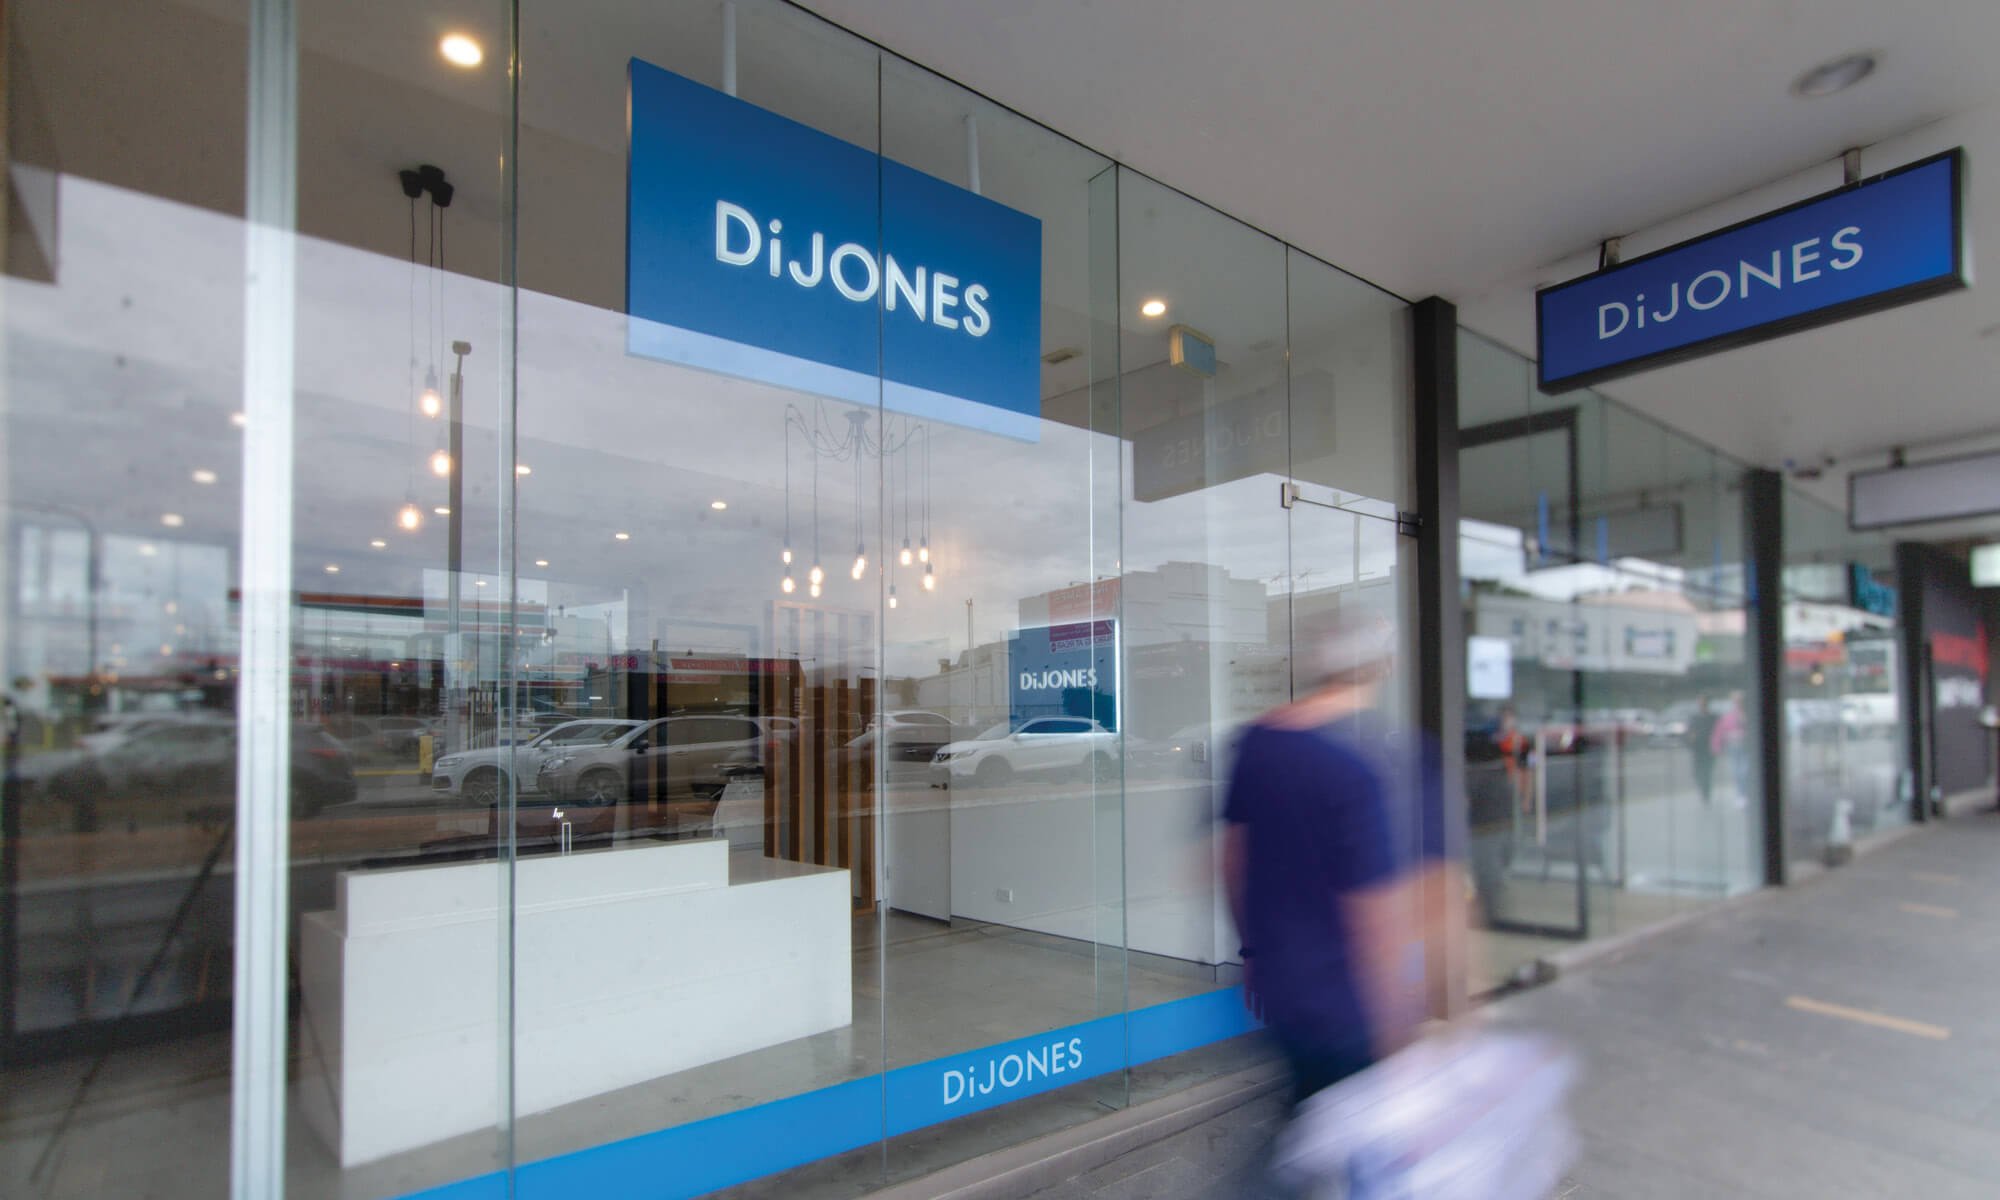 DiJones Castle Hill office opens servicing North West Sydney